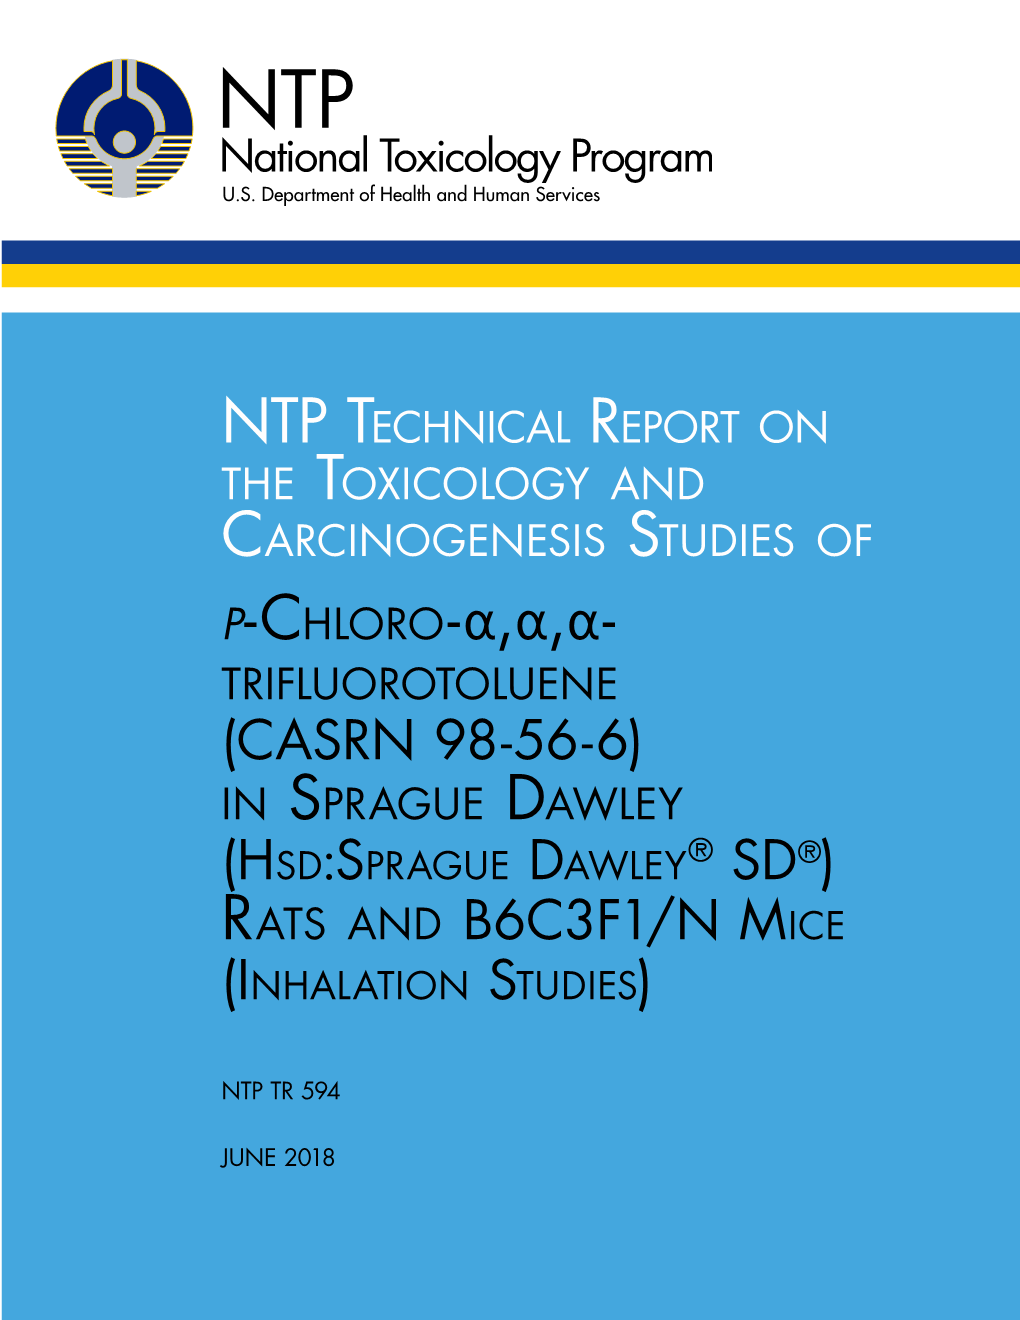 P-Chloro-Α,Α,Α-Trifluorotoluene (CASRN 98-56-6) in Sprague Dawley (Hsd: Sprague Dawley® SD®) Rats and B6C3F1/N Mice (Inhalation Studies) Technical Report 594